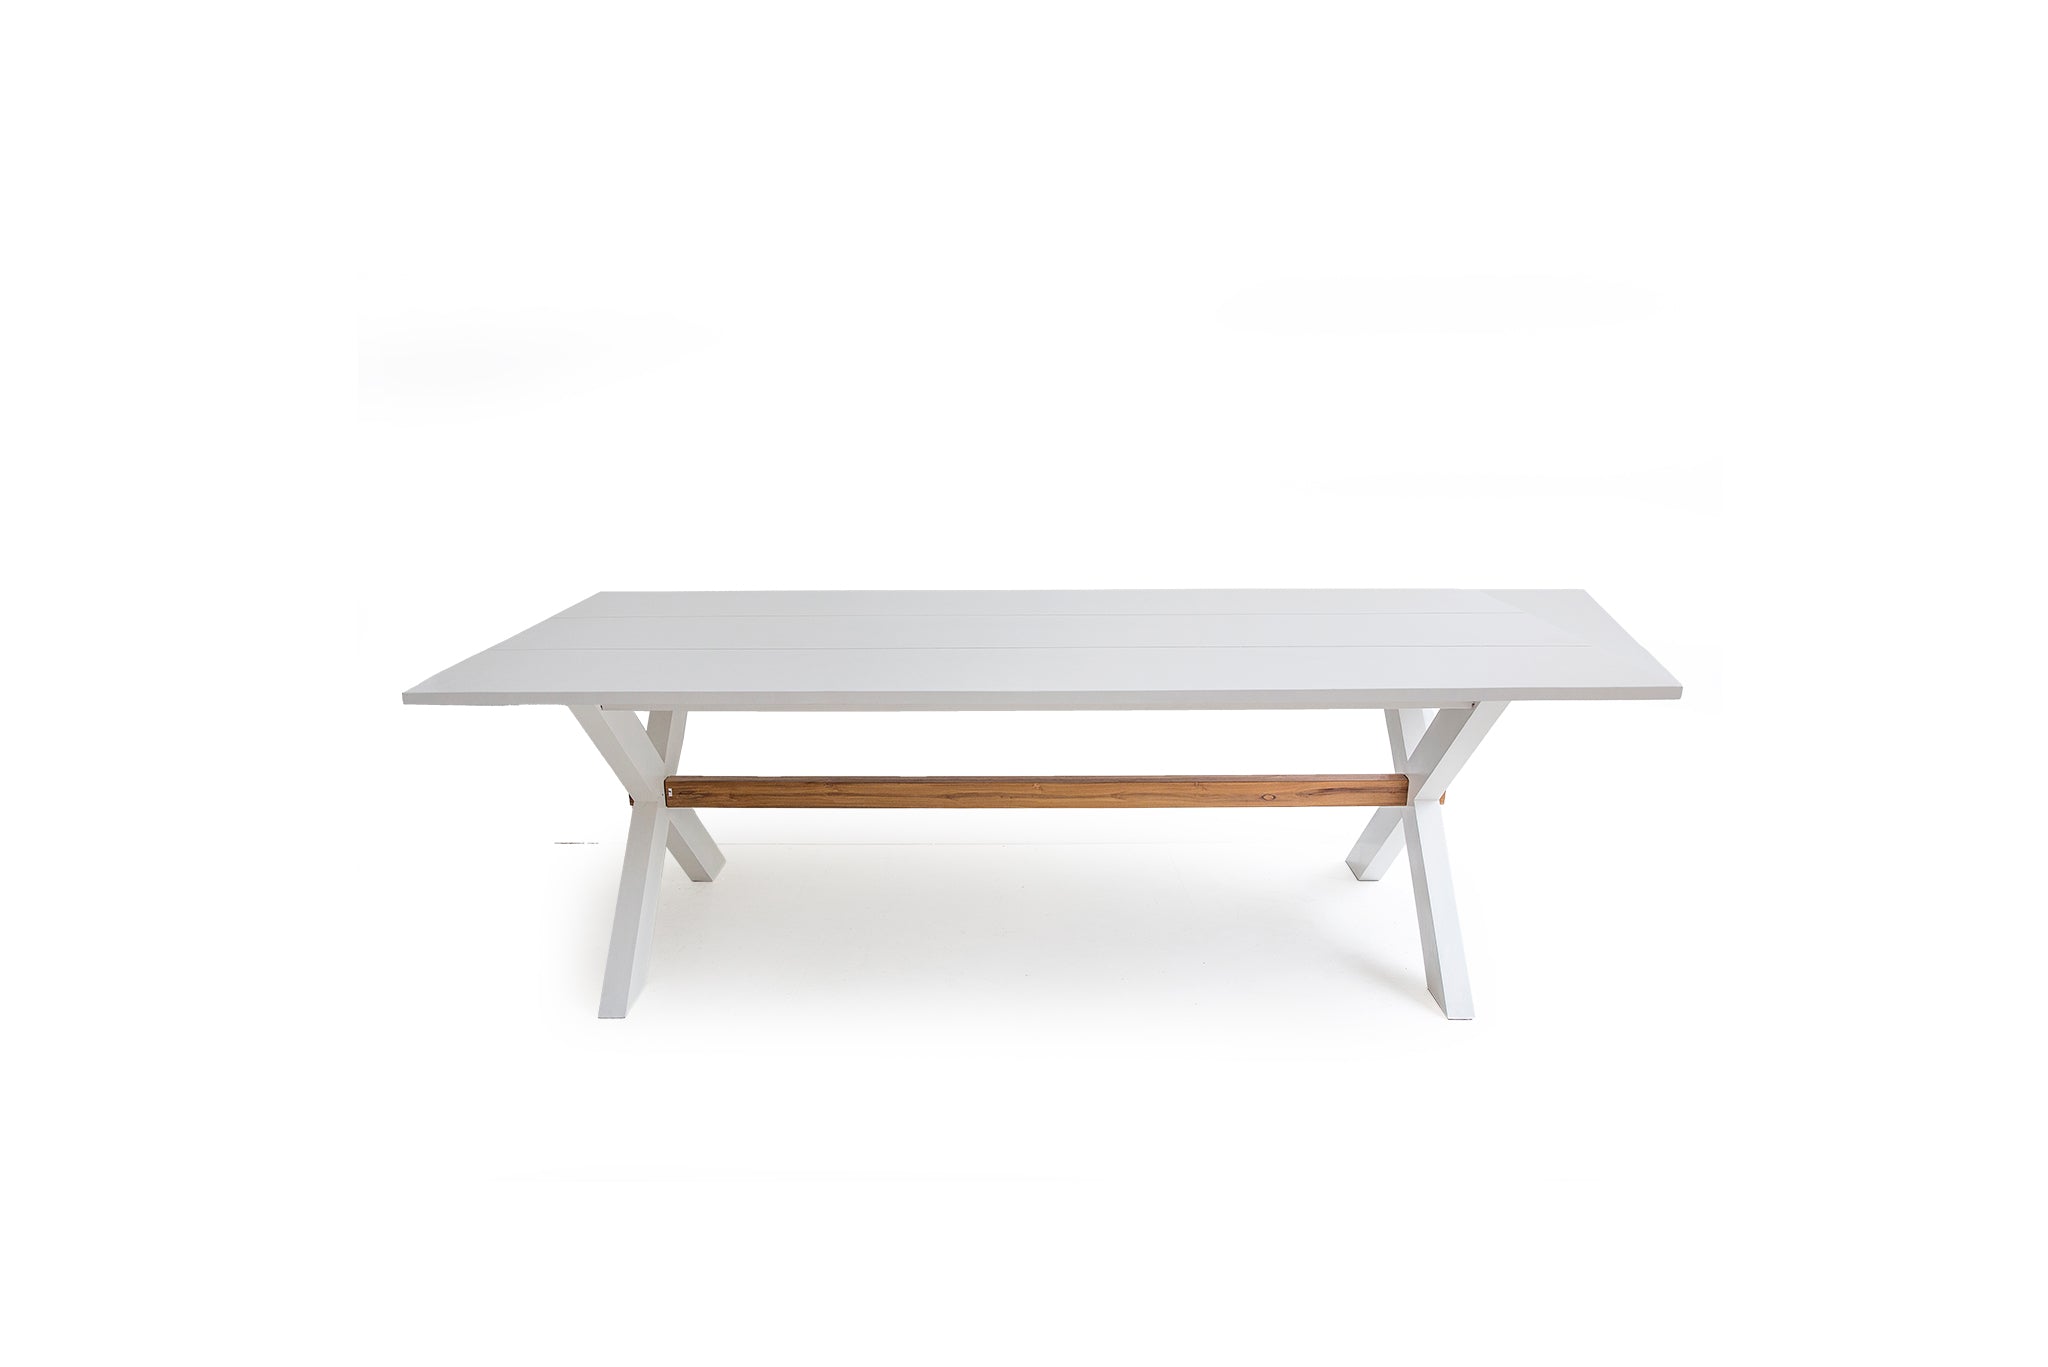 Leeton Mahogany Dining Table – 2.4m